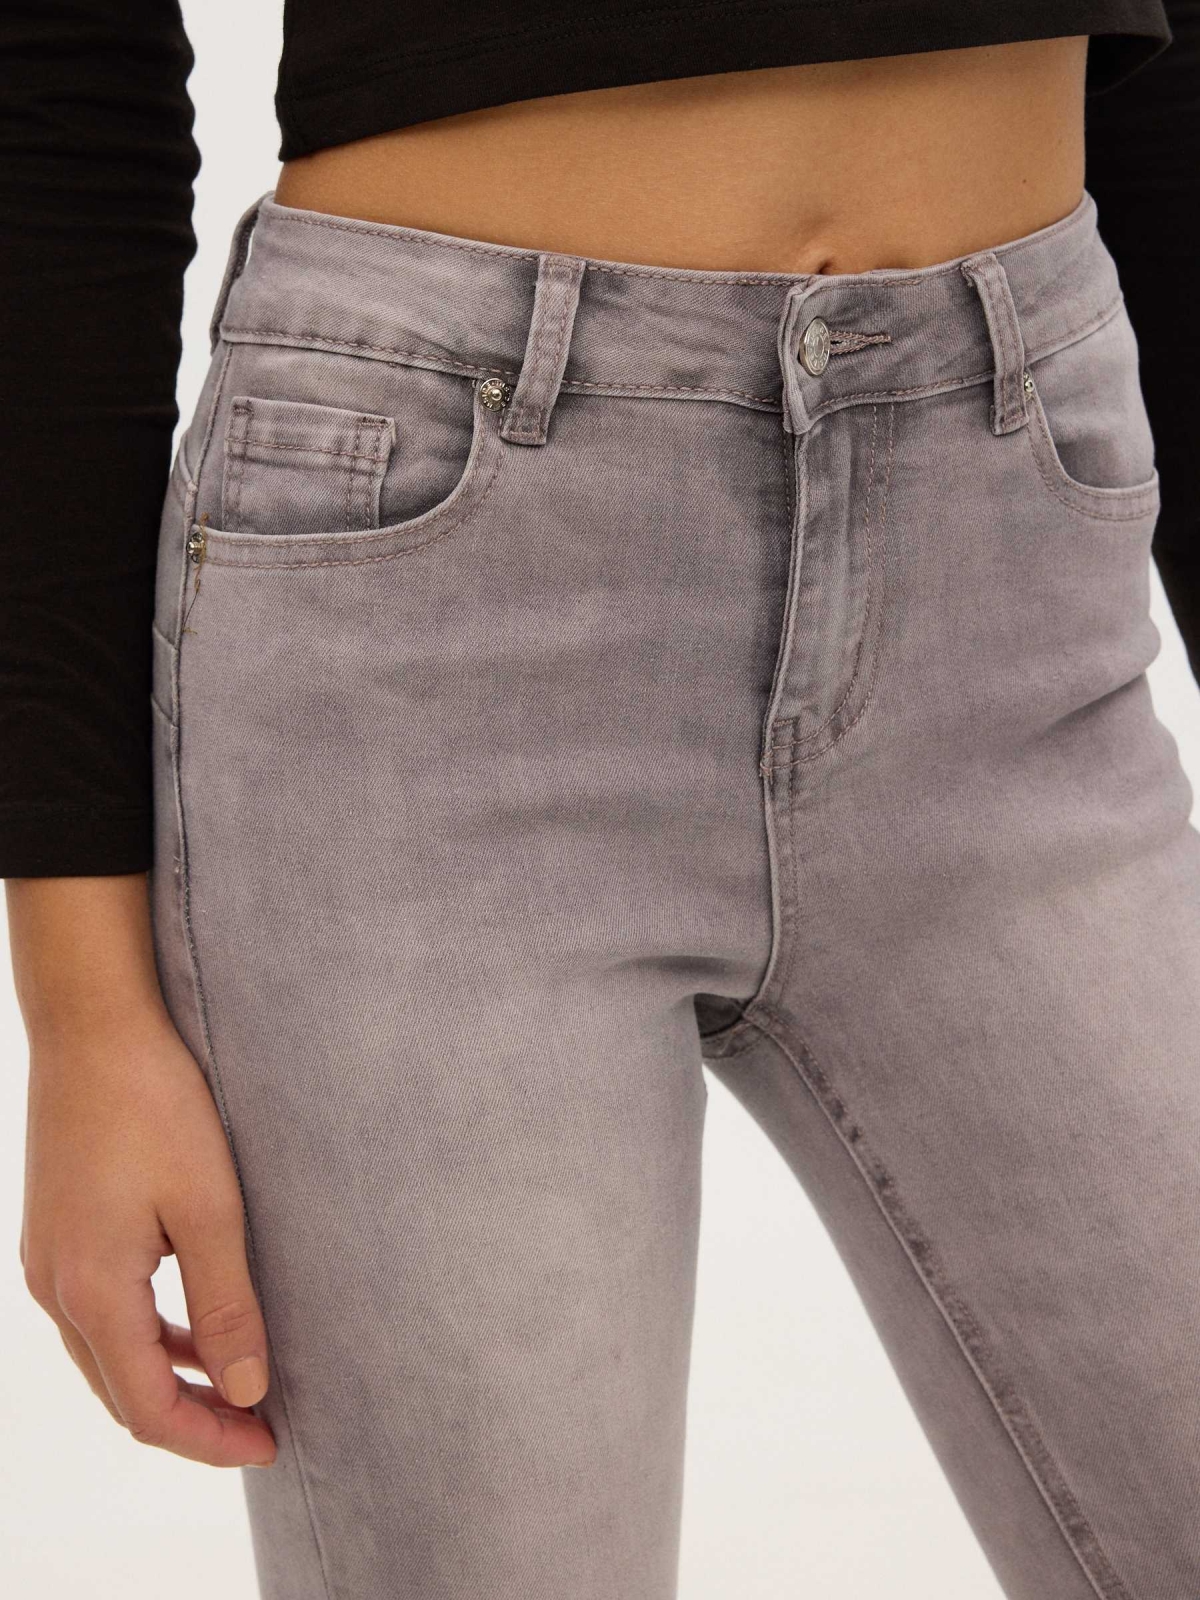 Worn push up skinny jeans light grey detail view